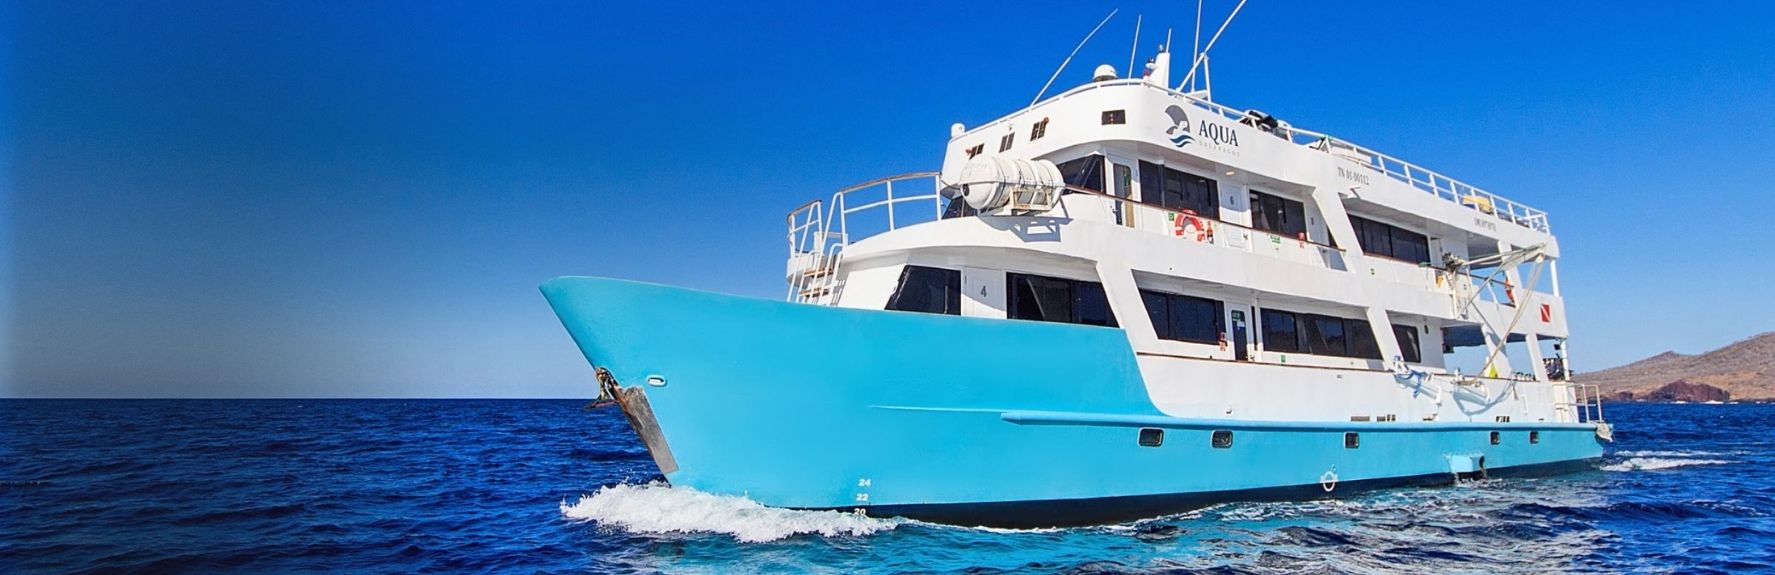 Galapagos Aqua Cruise